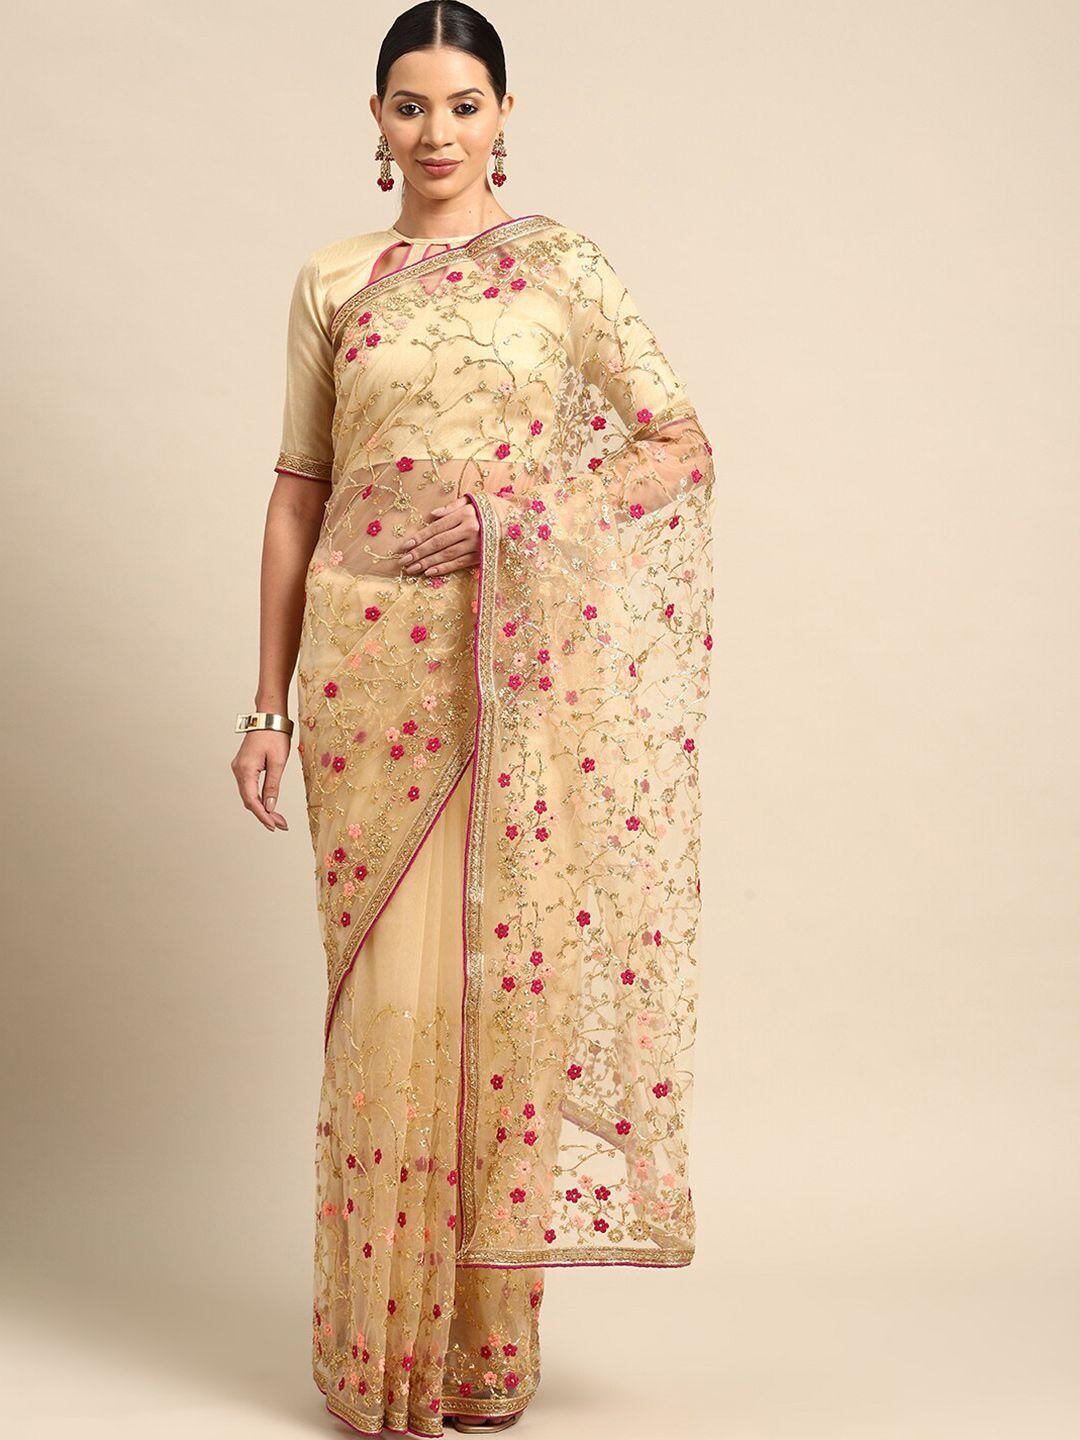 mitera cream-coloured & pink floral embroidered net saree